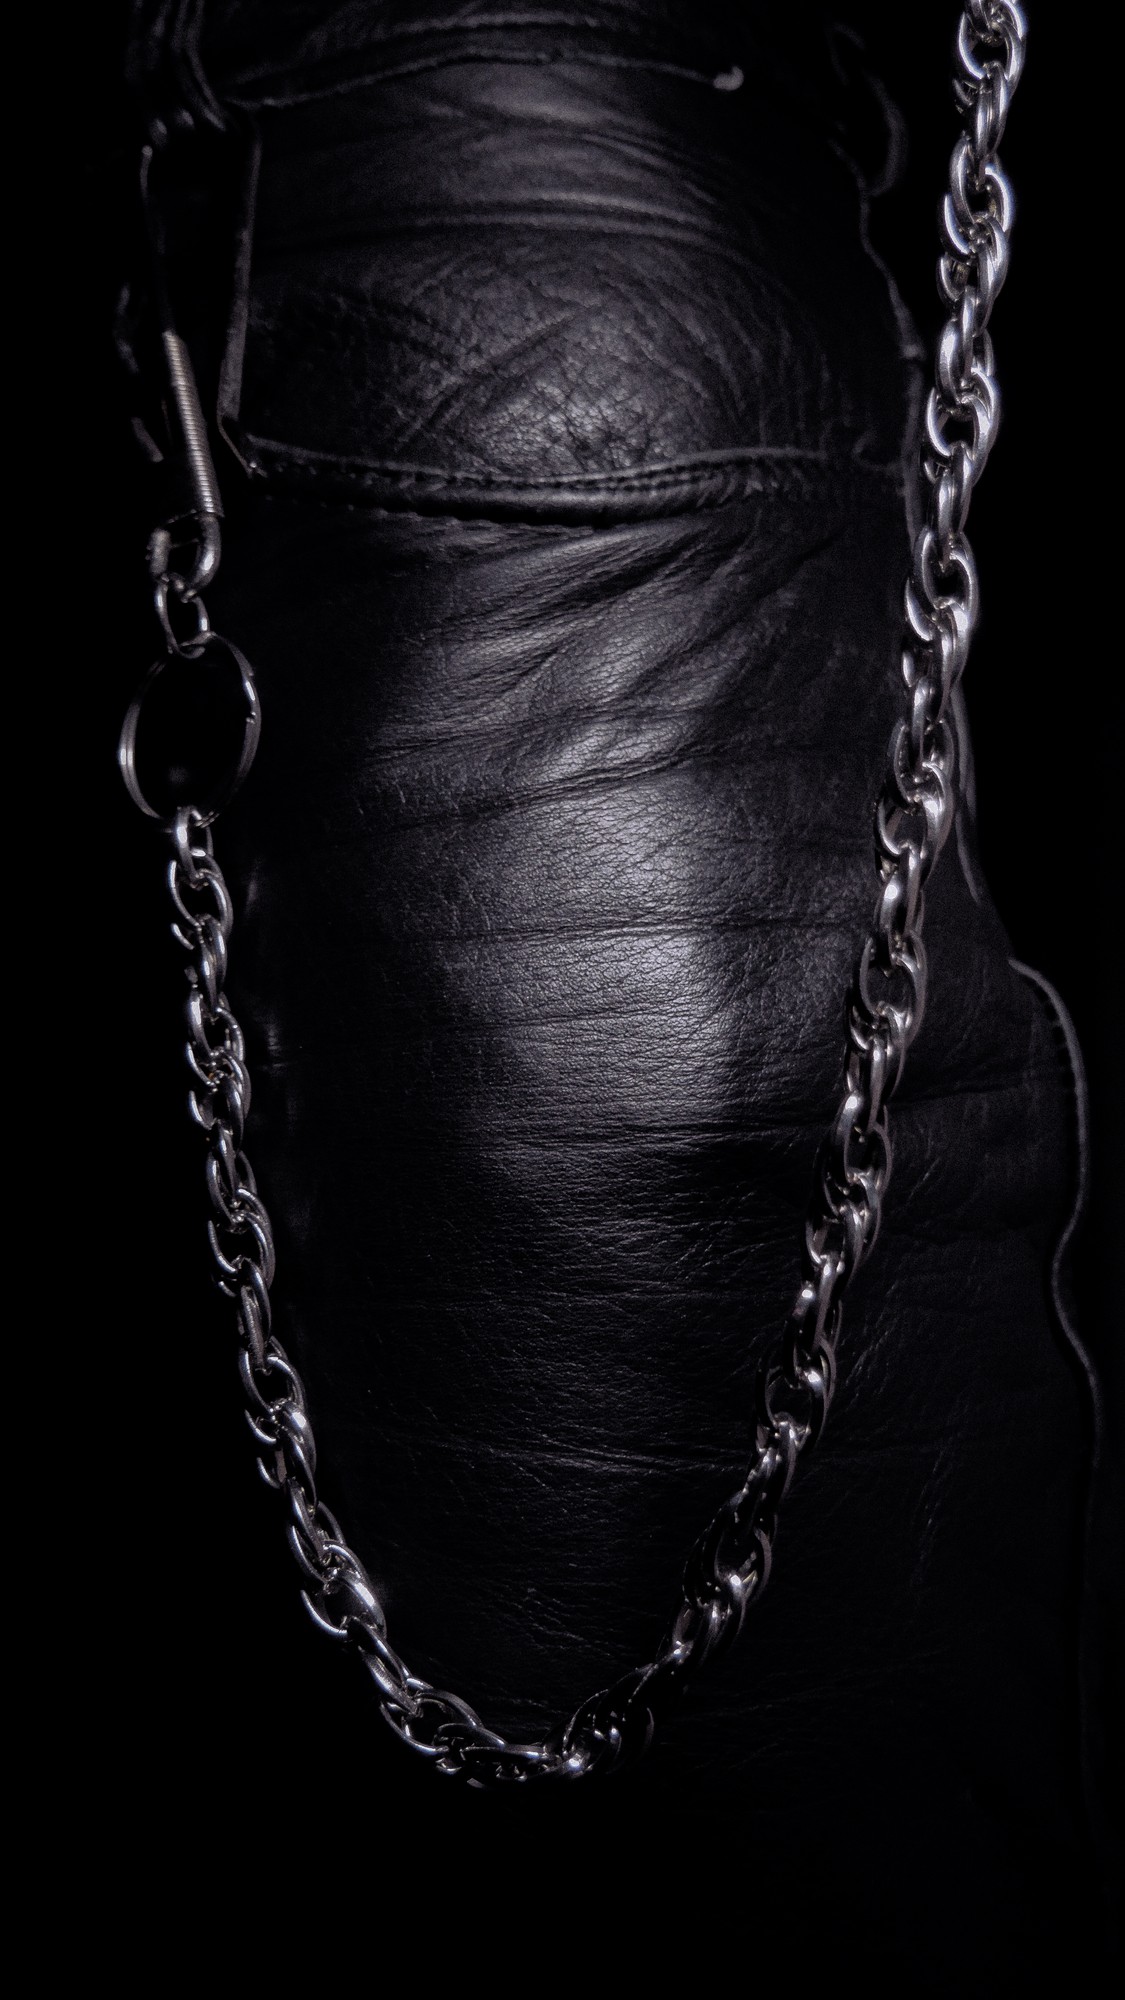 Revolution - jeans chain | chain for keys